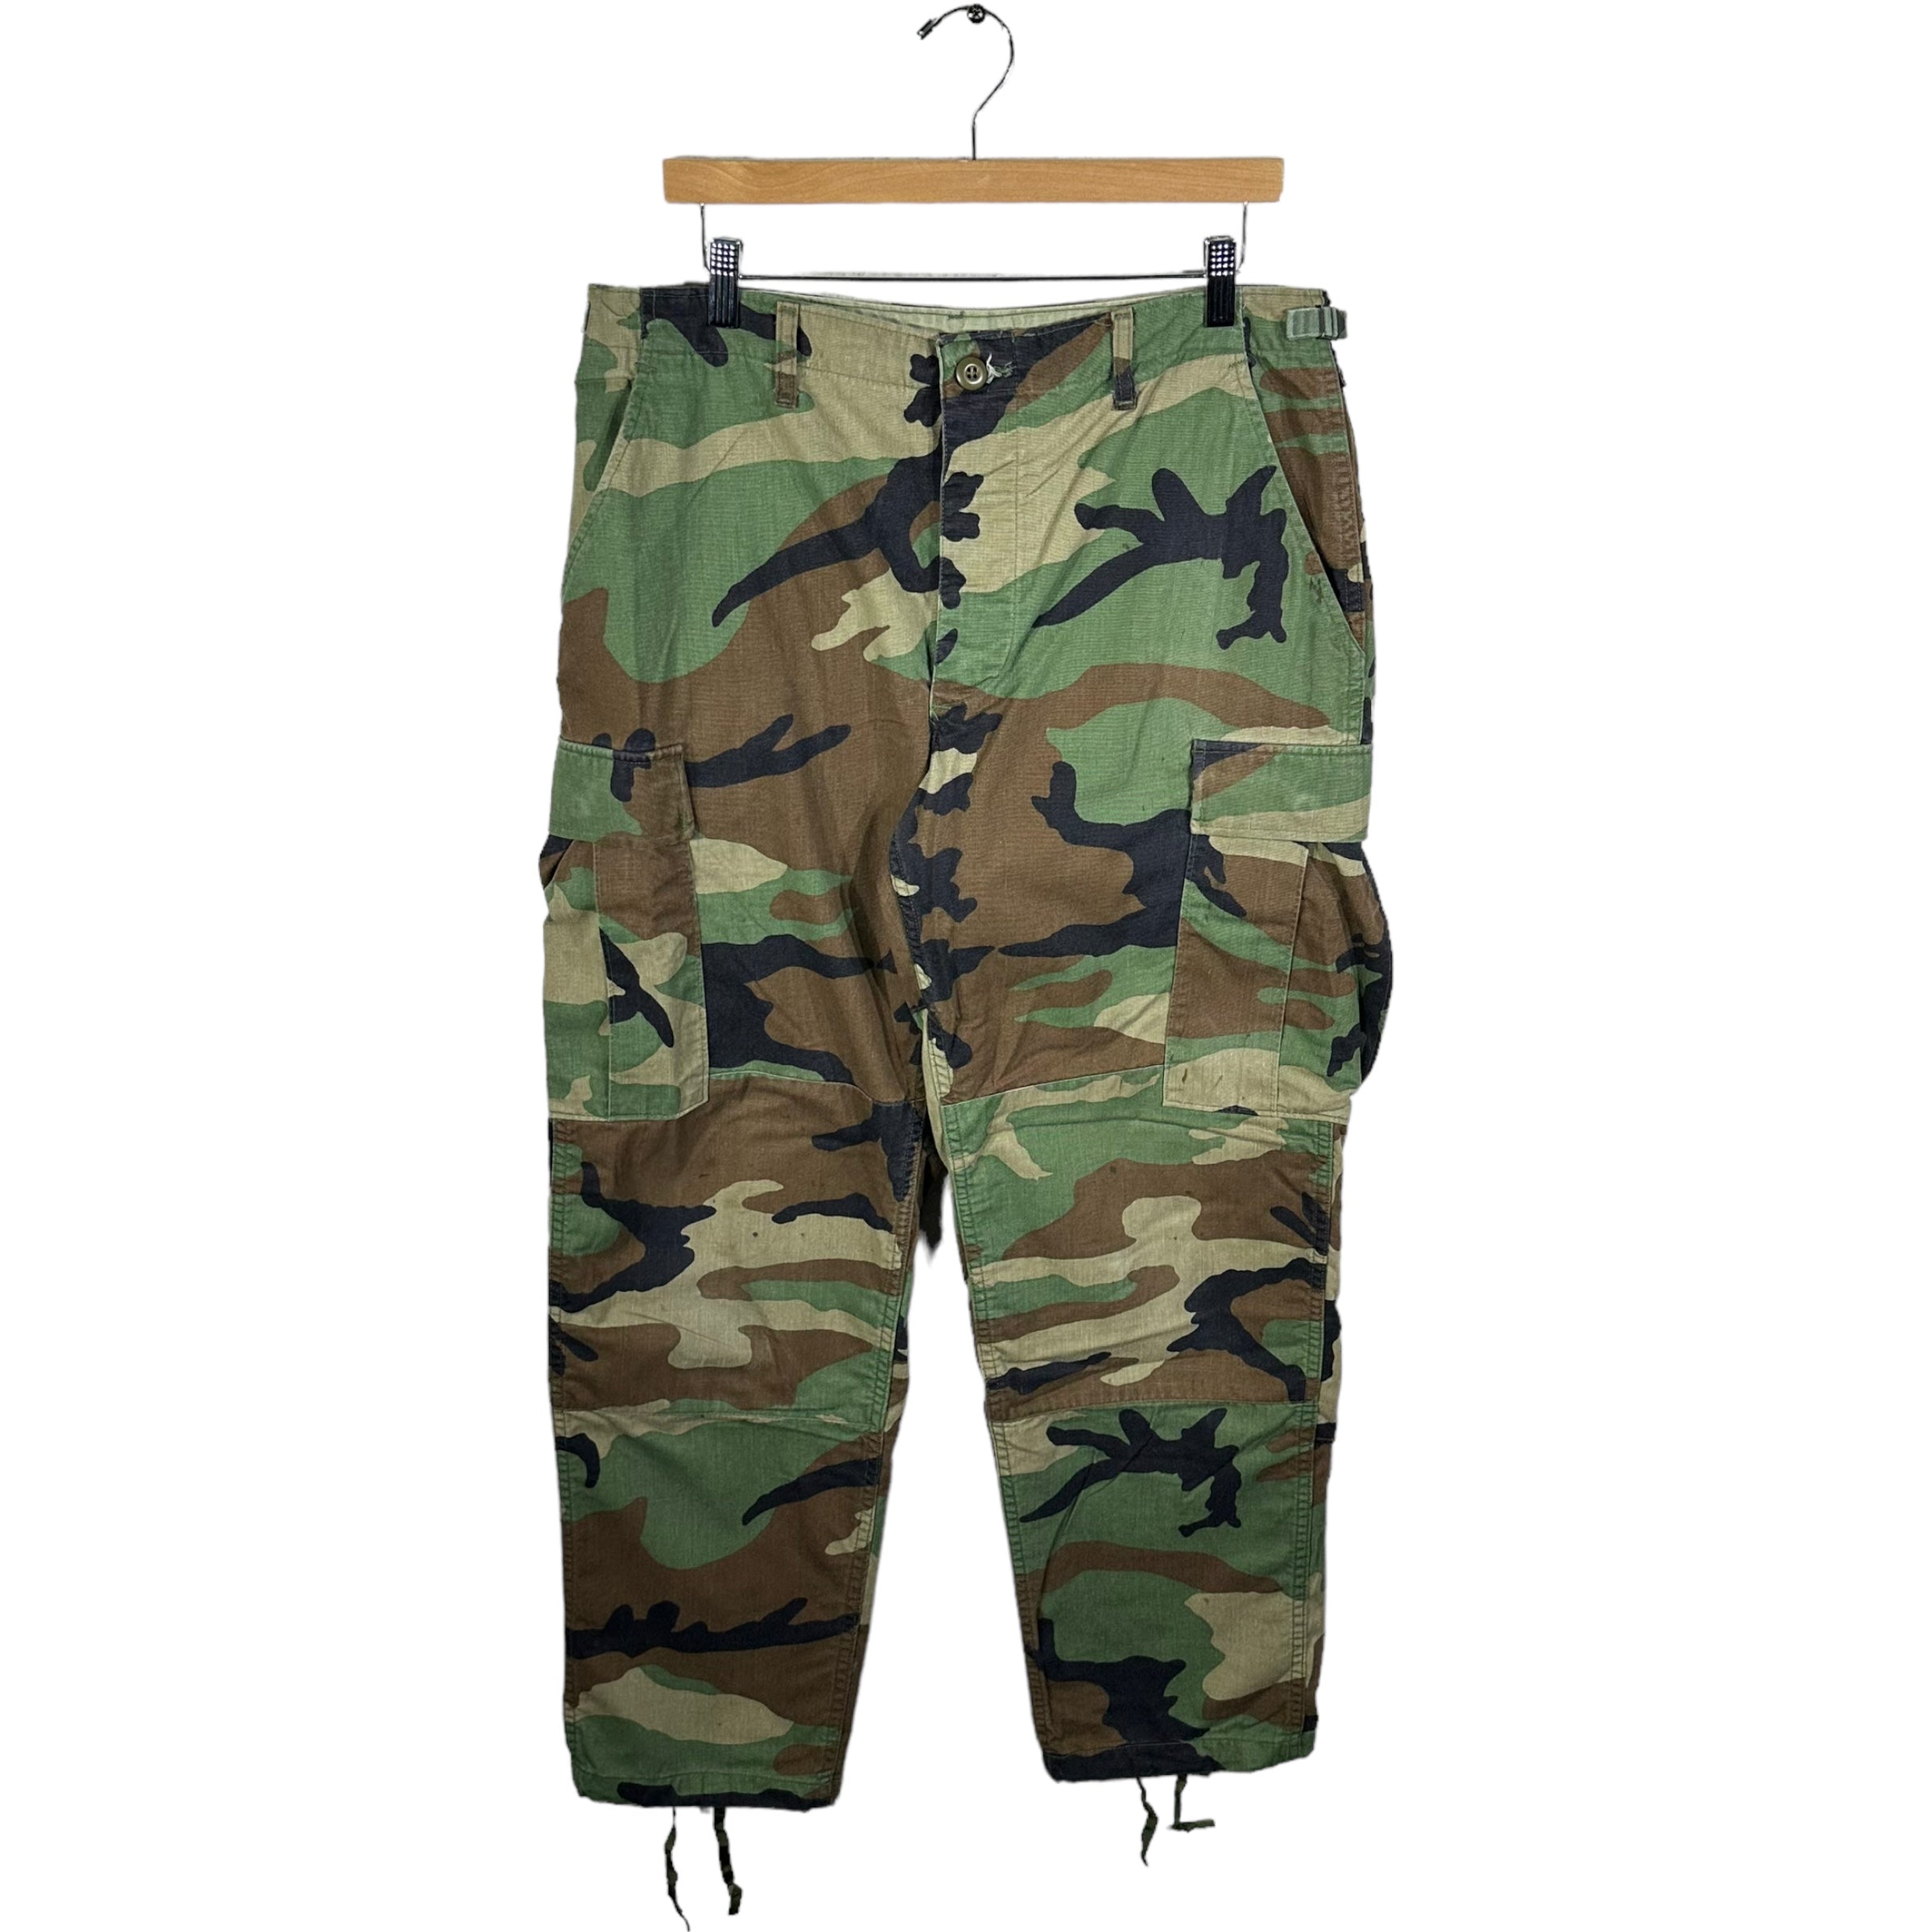 Vintage Military Double Knee Cargo Camo Pants